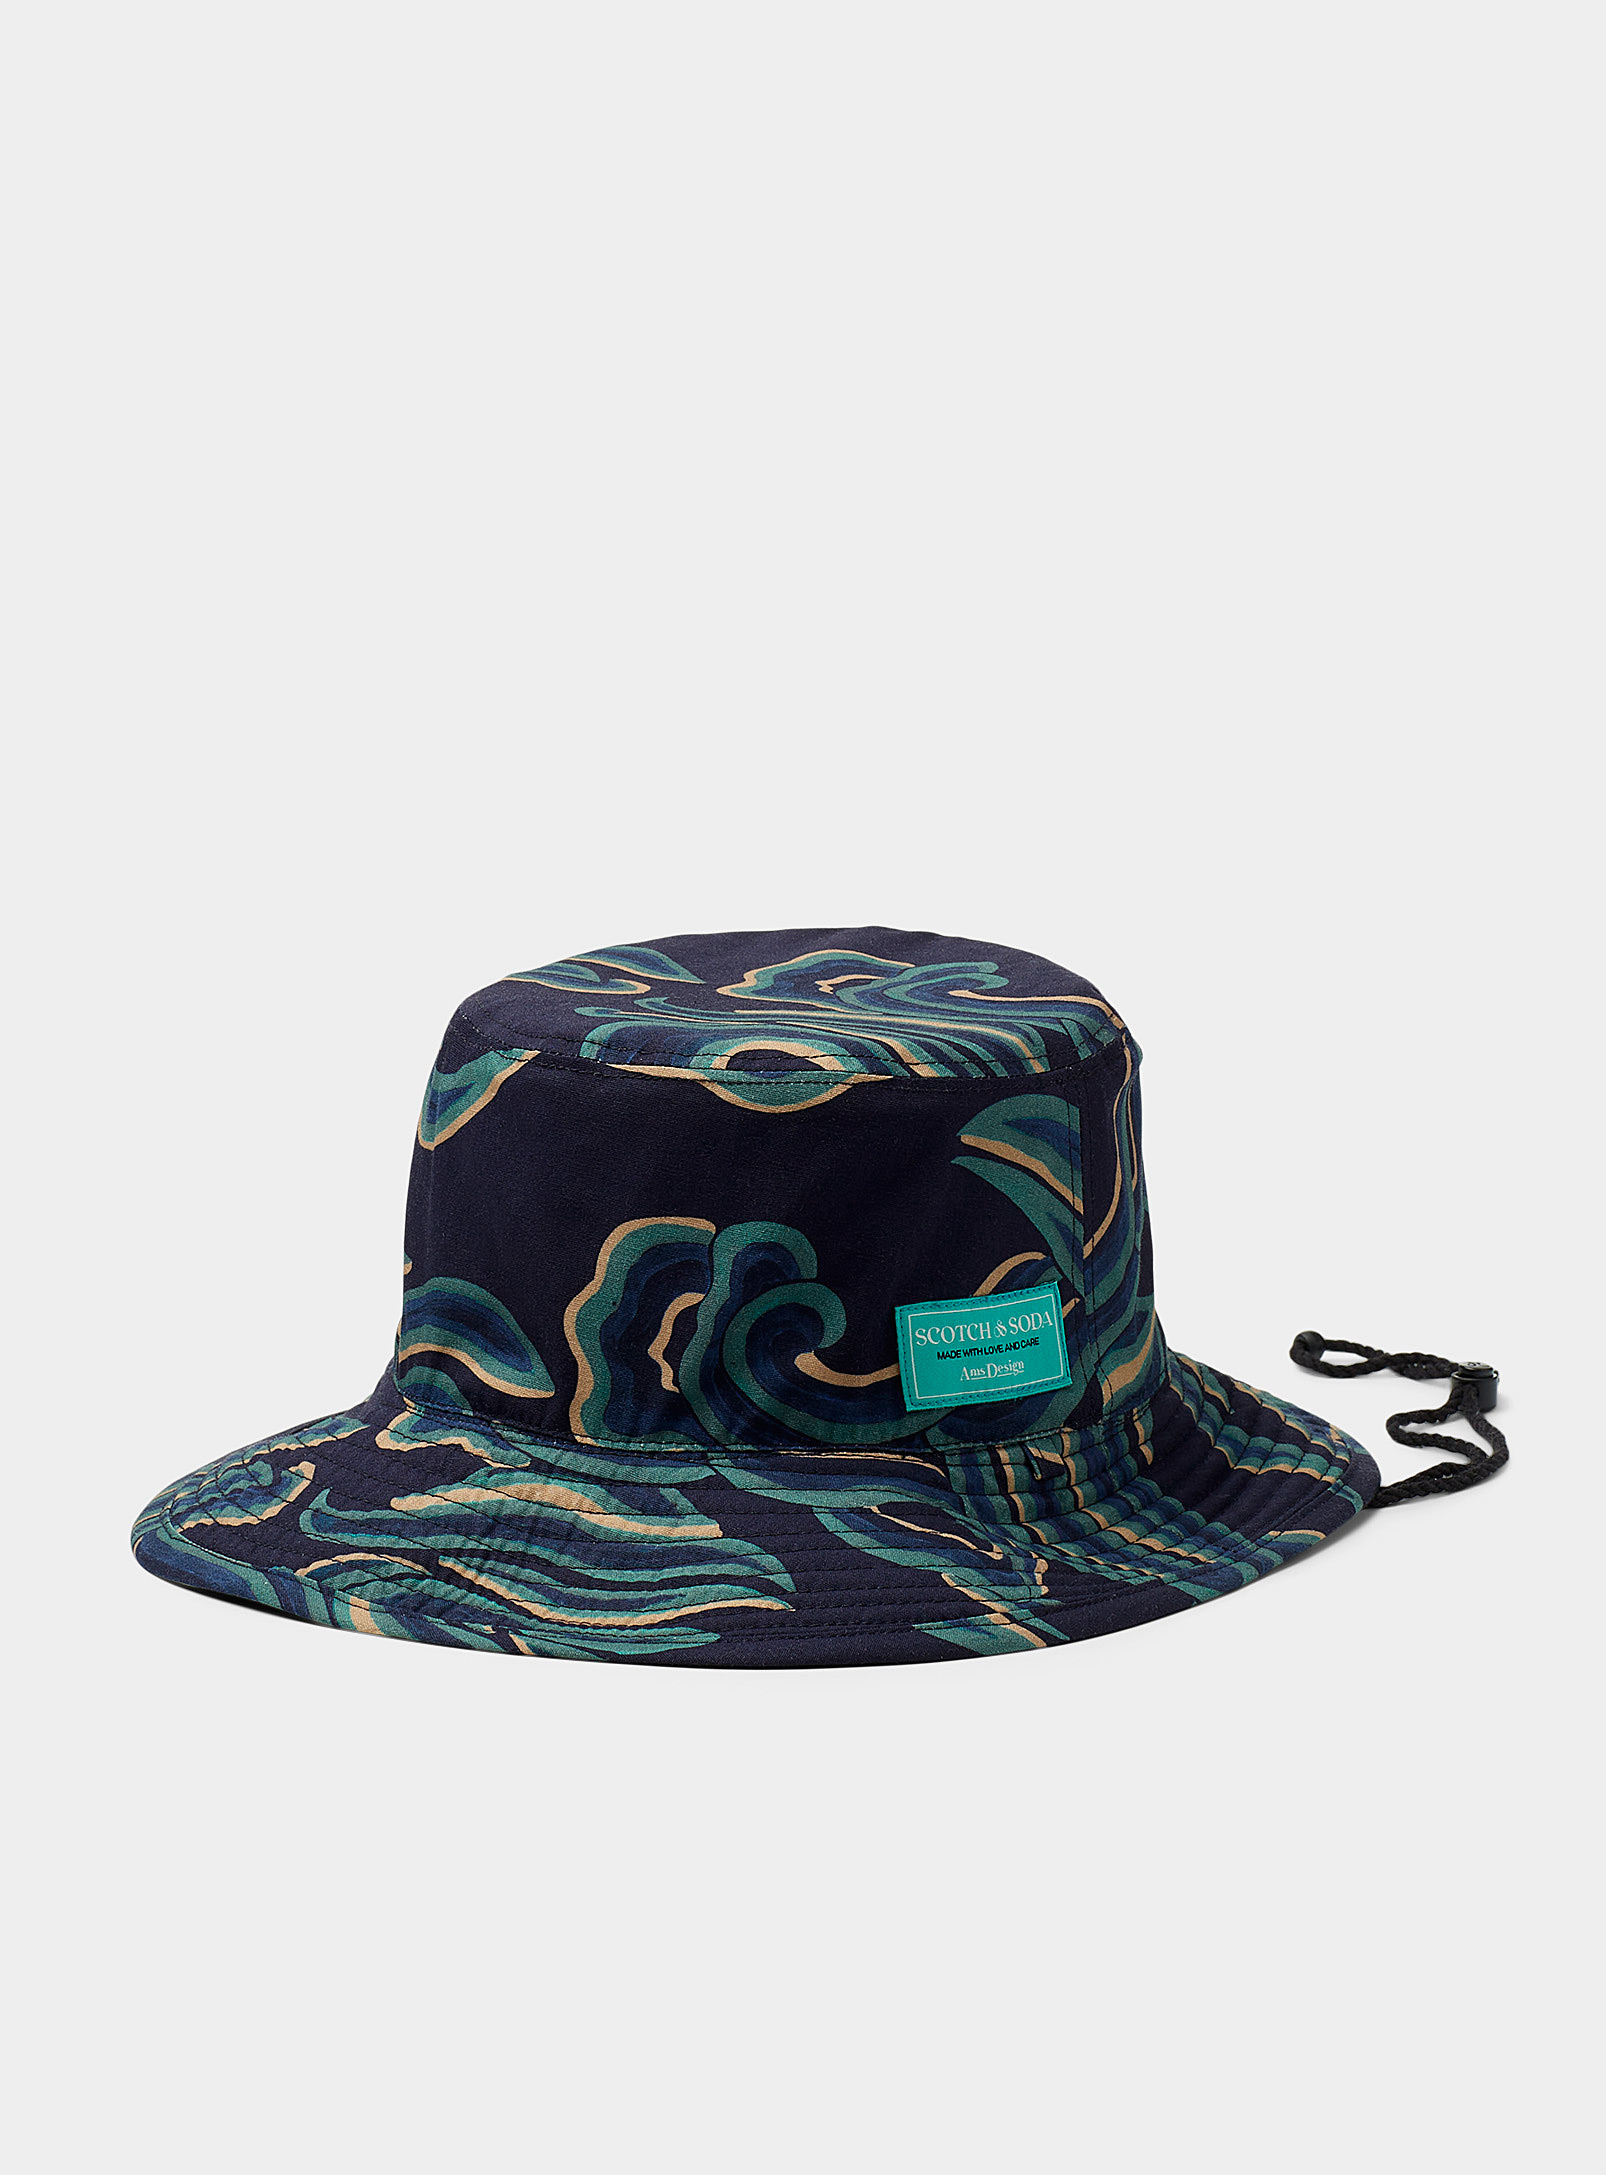 Scotch & Soda - Men's Reversible abstract foliage bucket hat